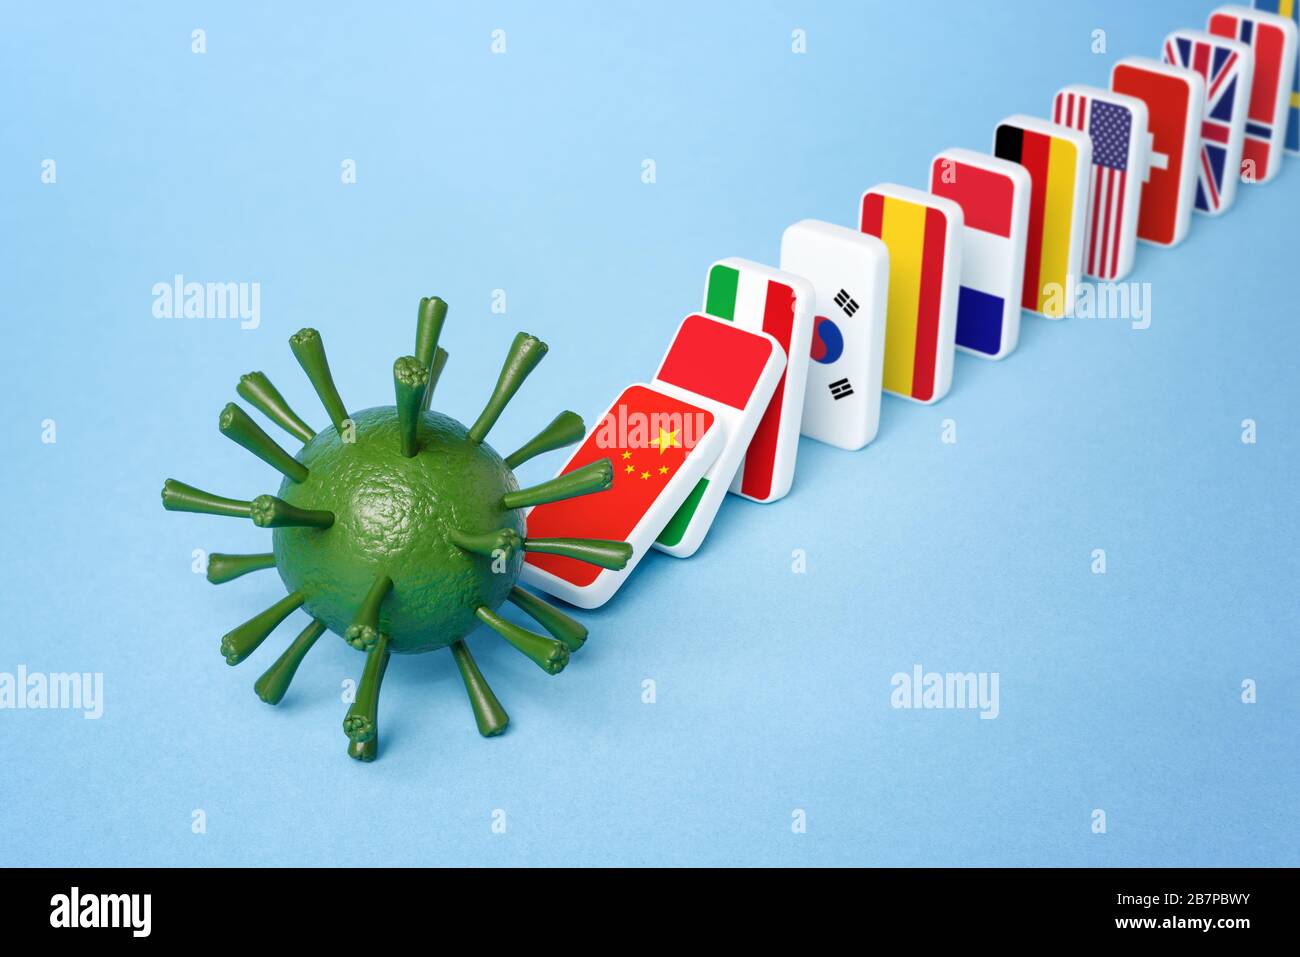 Worldwide spread of Coronavirus disease. COVID-19 pandemic. Domino effect Stock Photo